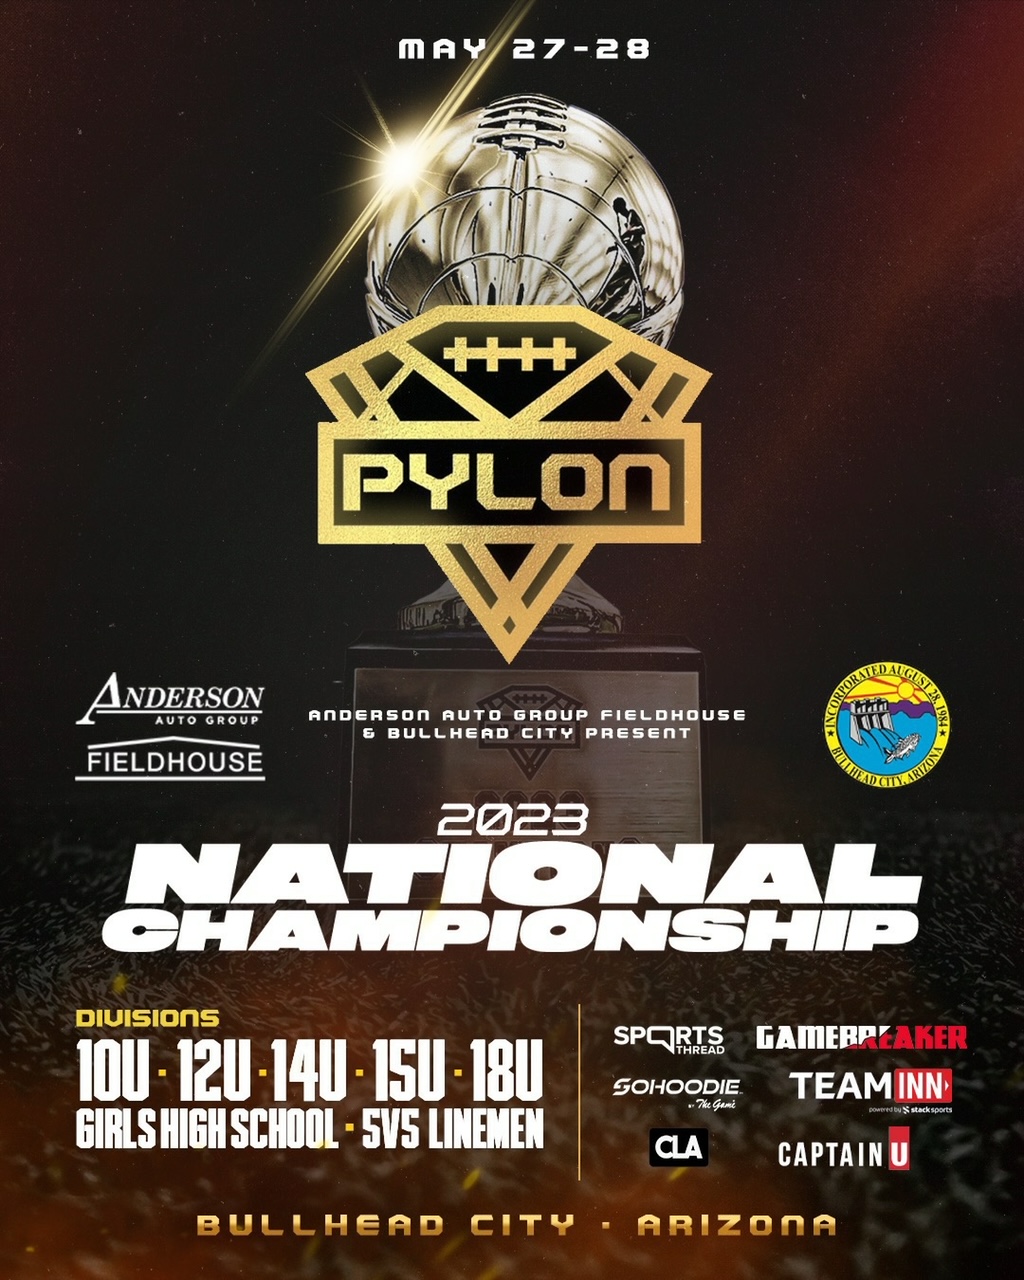 Pylon 7on7 National Championship